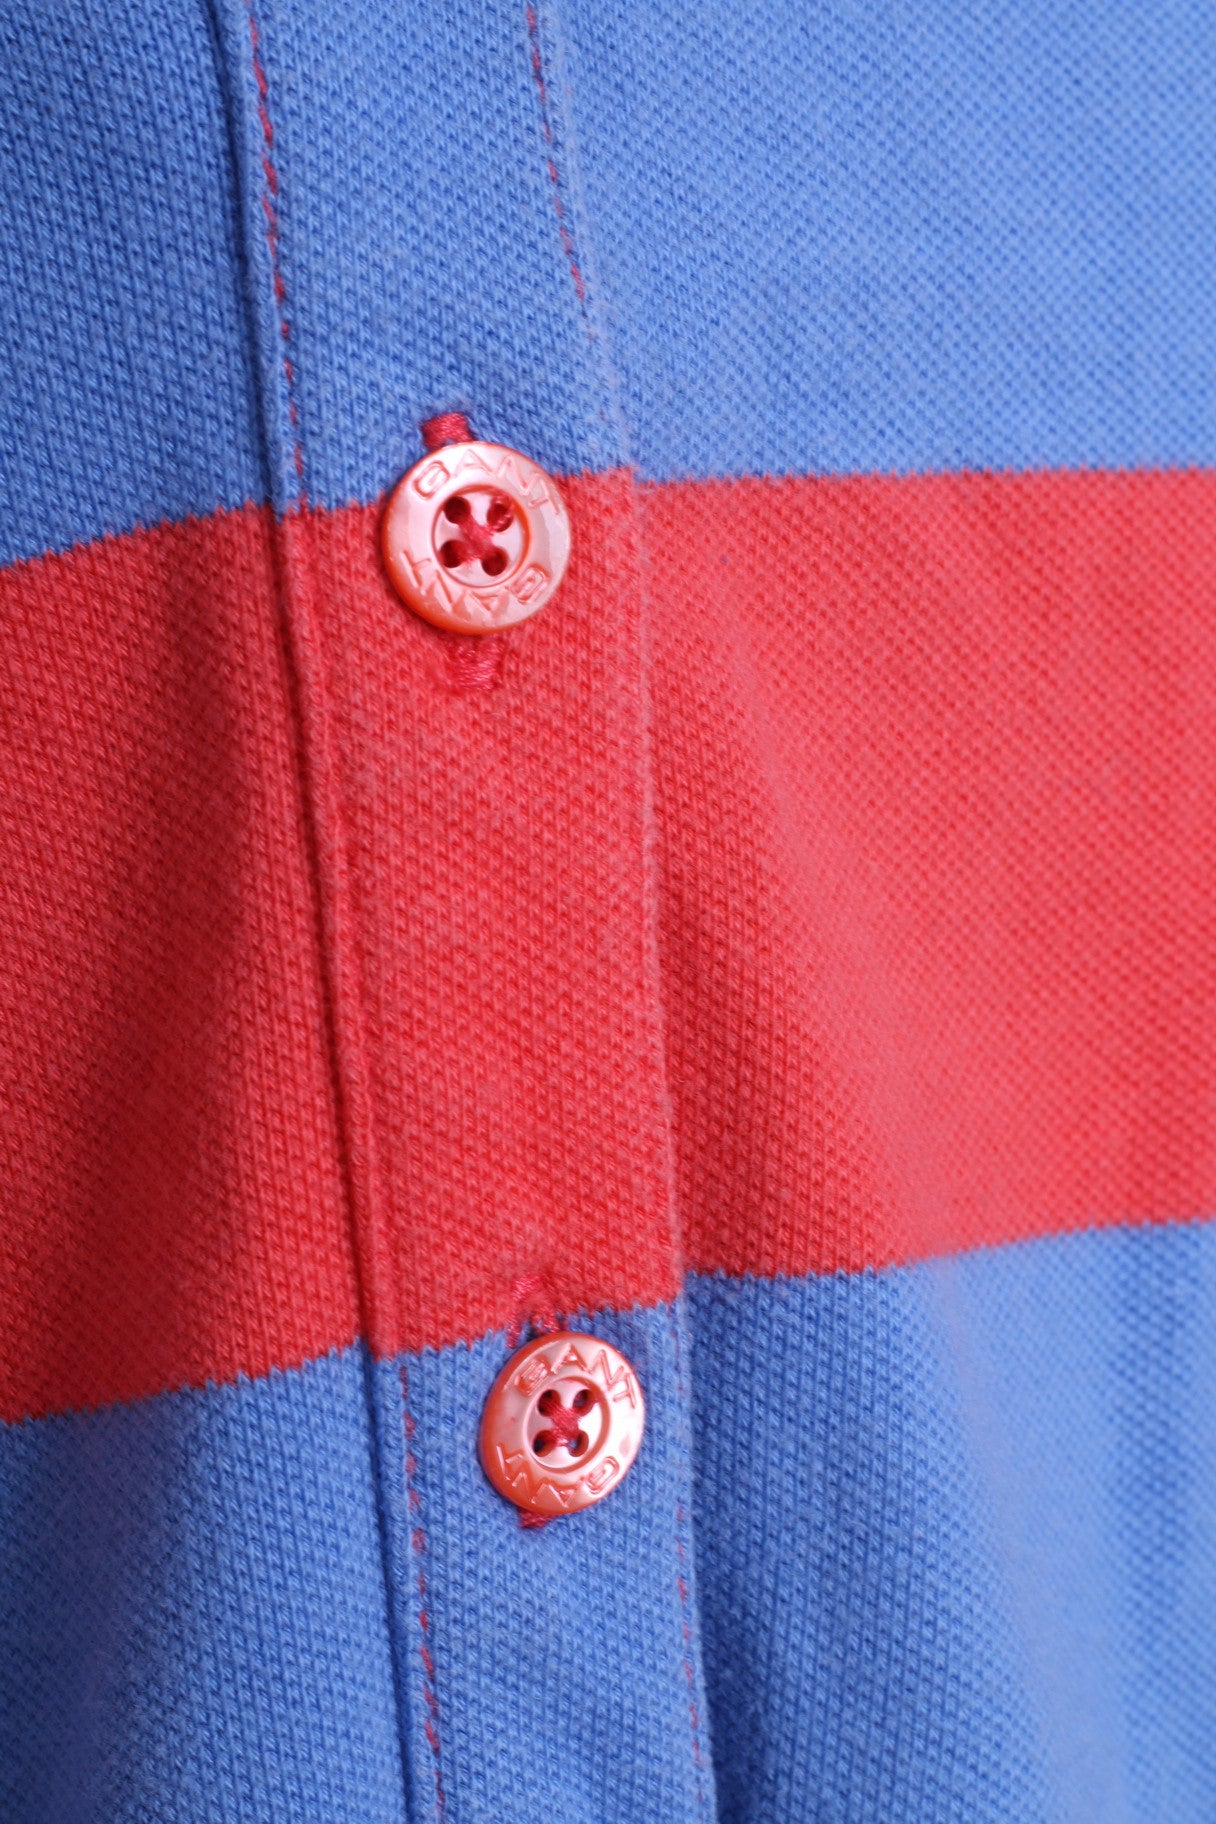 GANT Womens L Polo Shirt Striped Blue Cotton Fitt Top